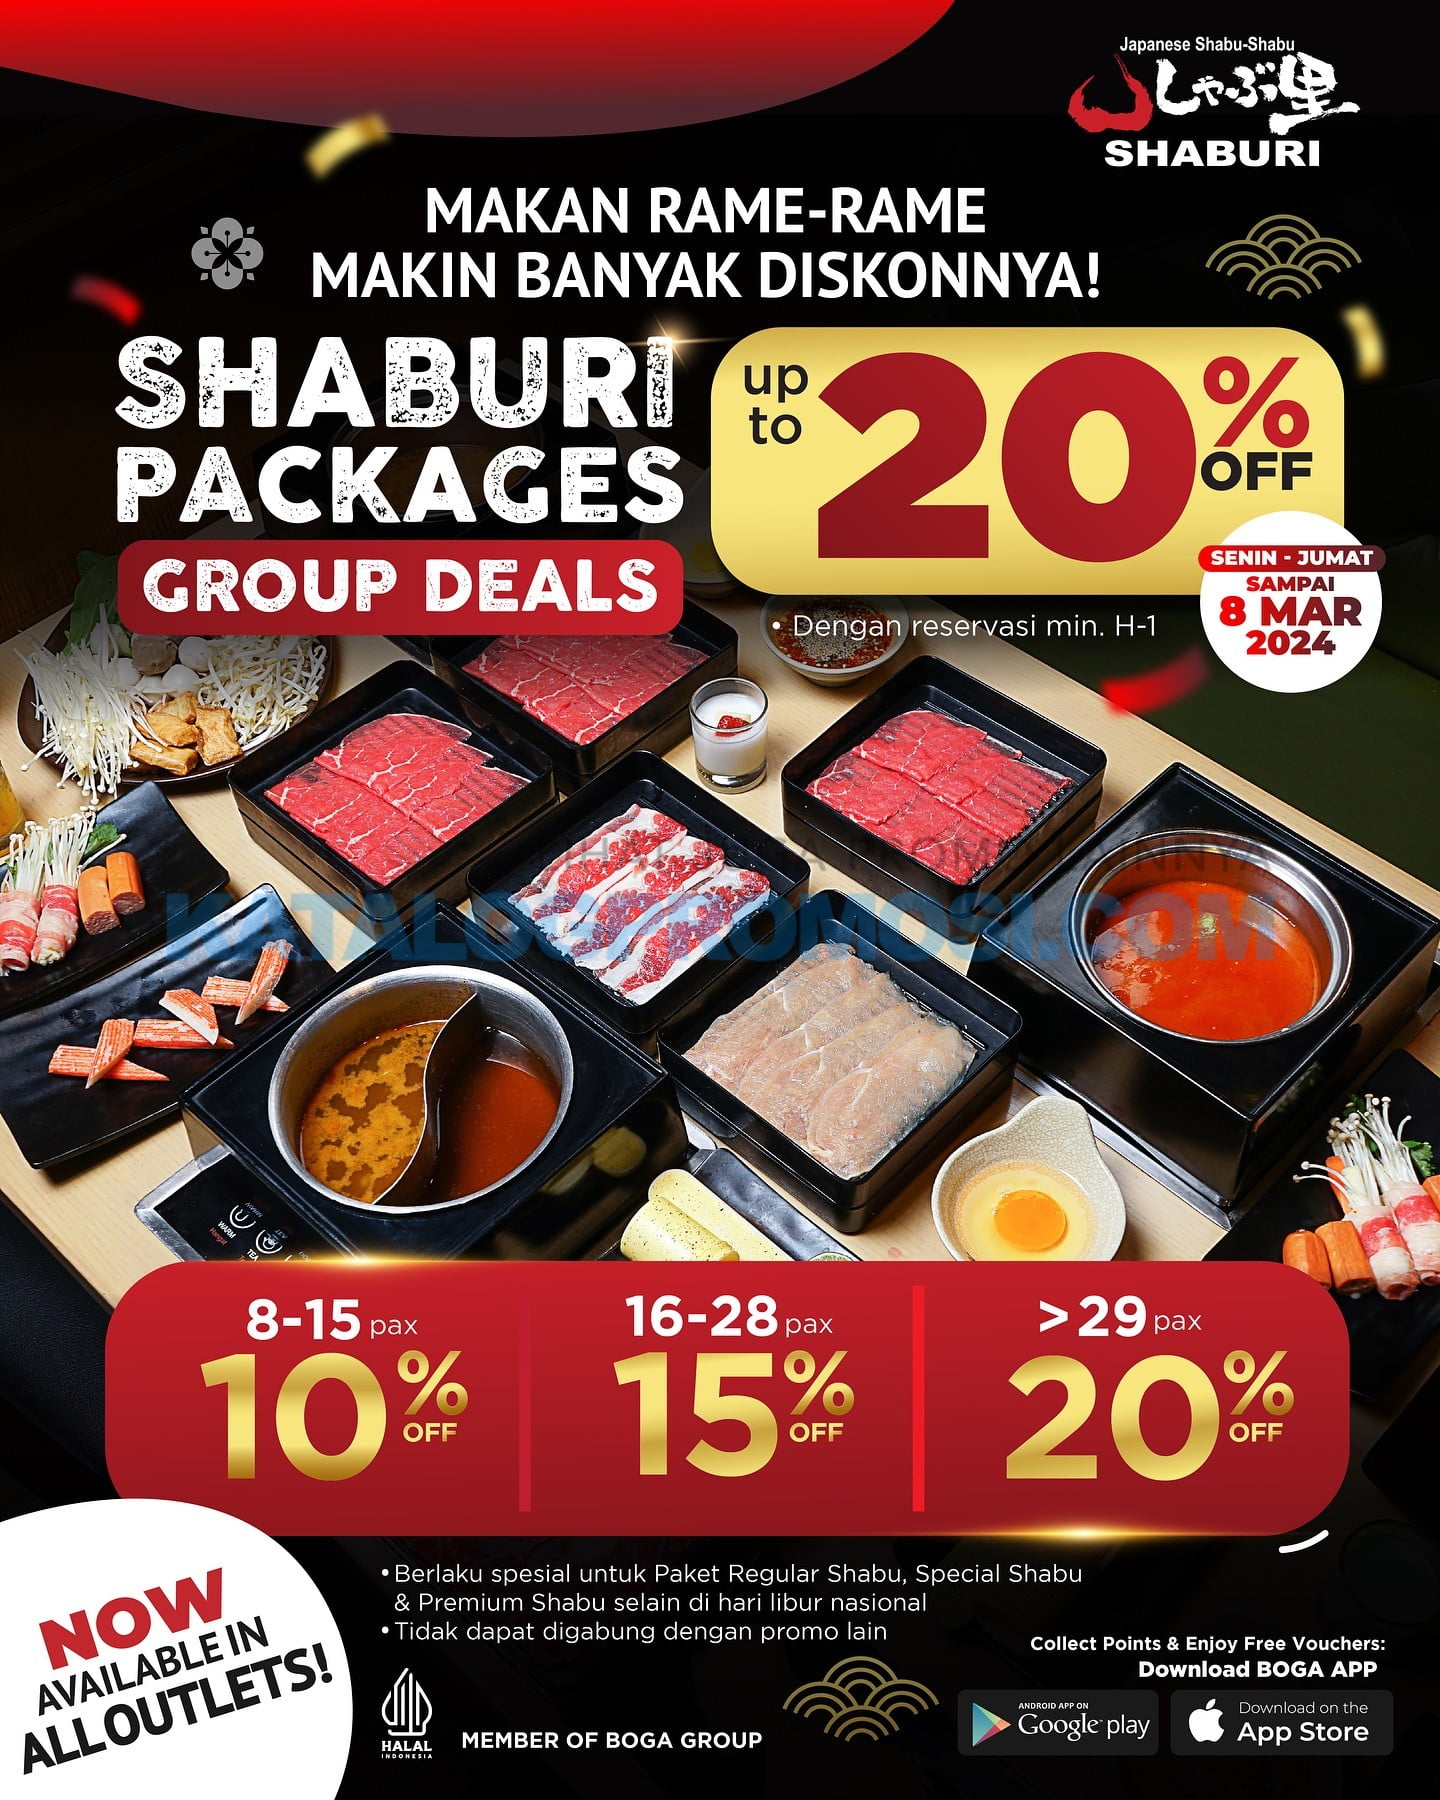 PROMO SHABURI Group Deals up to 20% OFF - Makan Rame-Rame Makin Banyak Diskonnya!